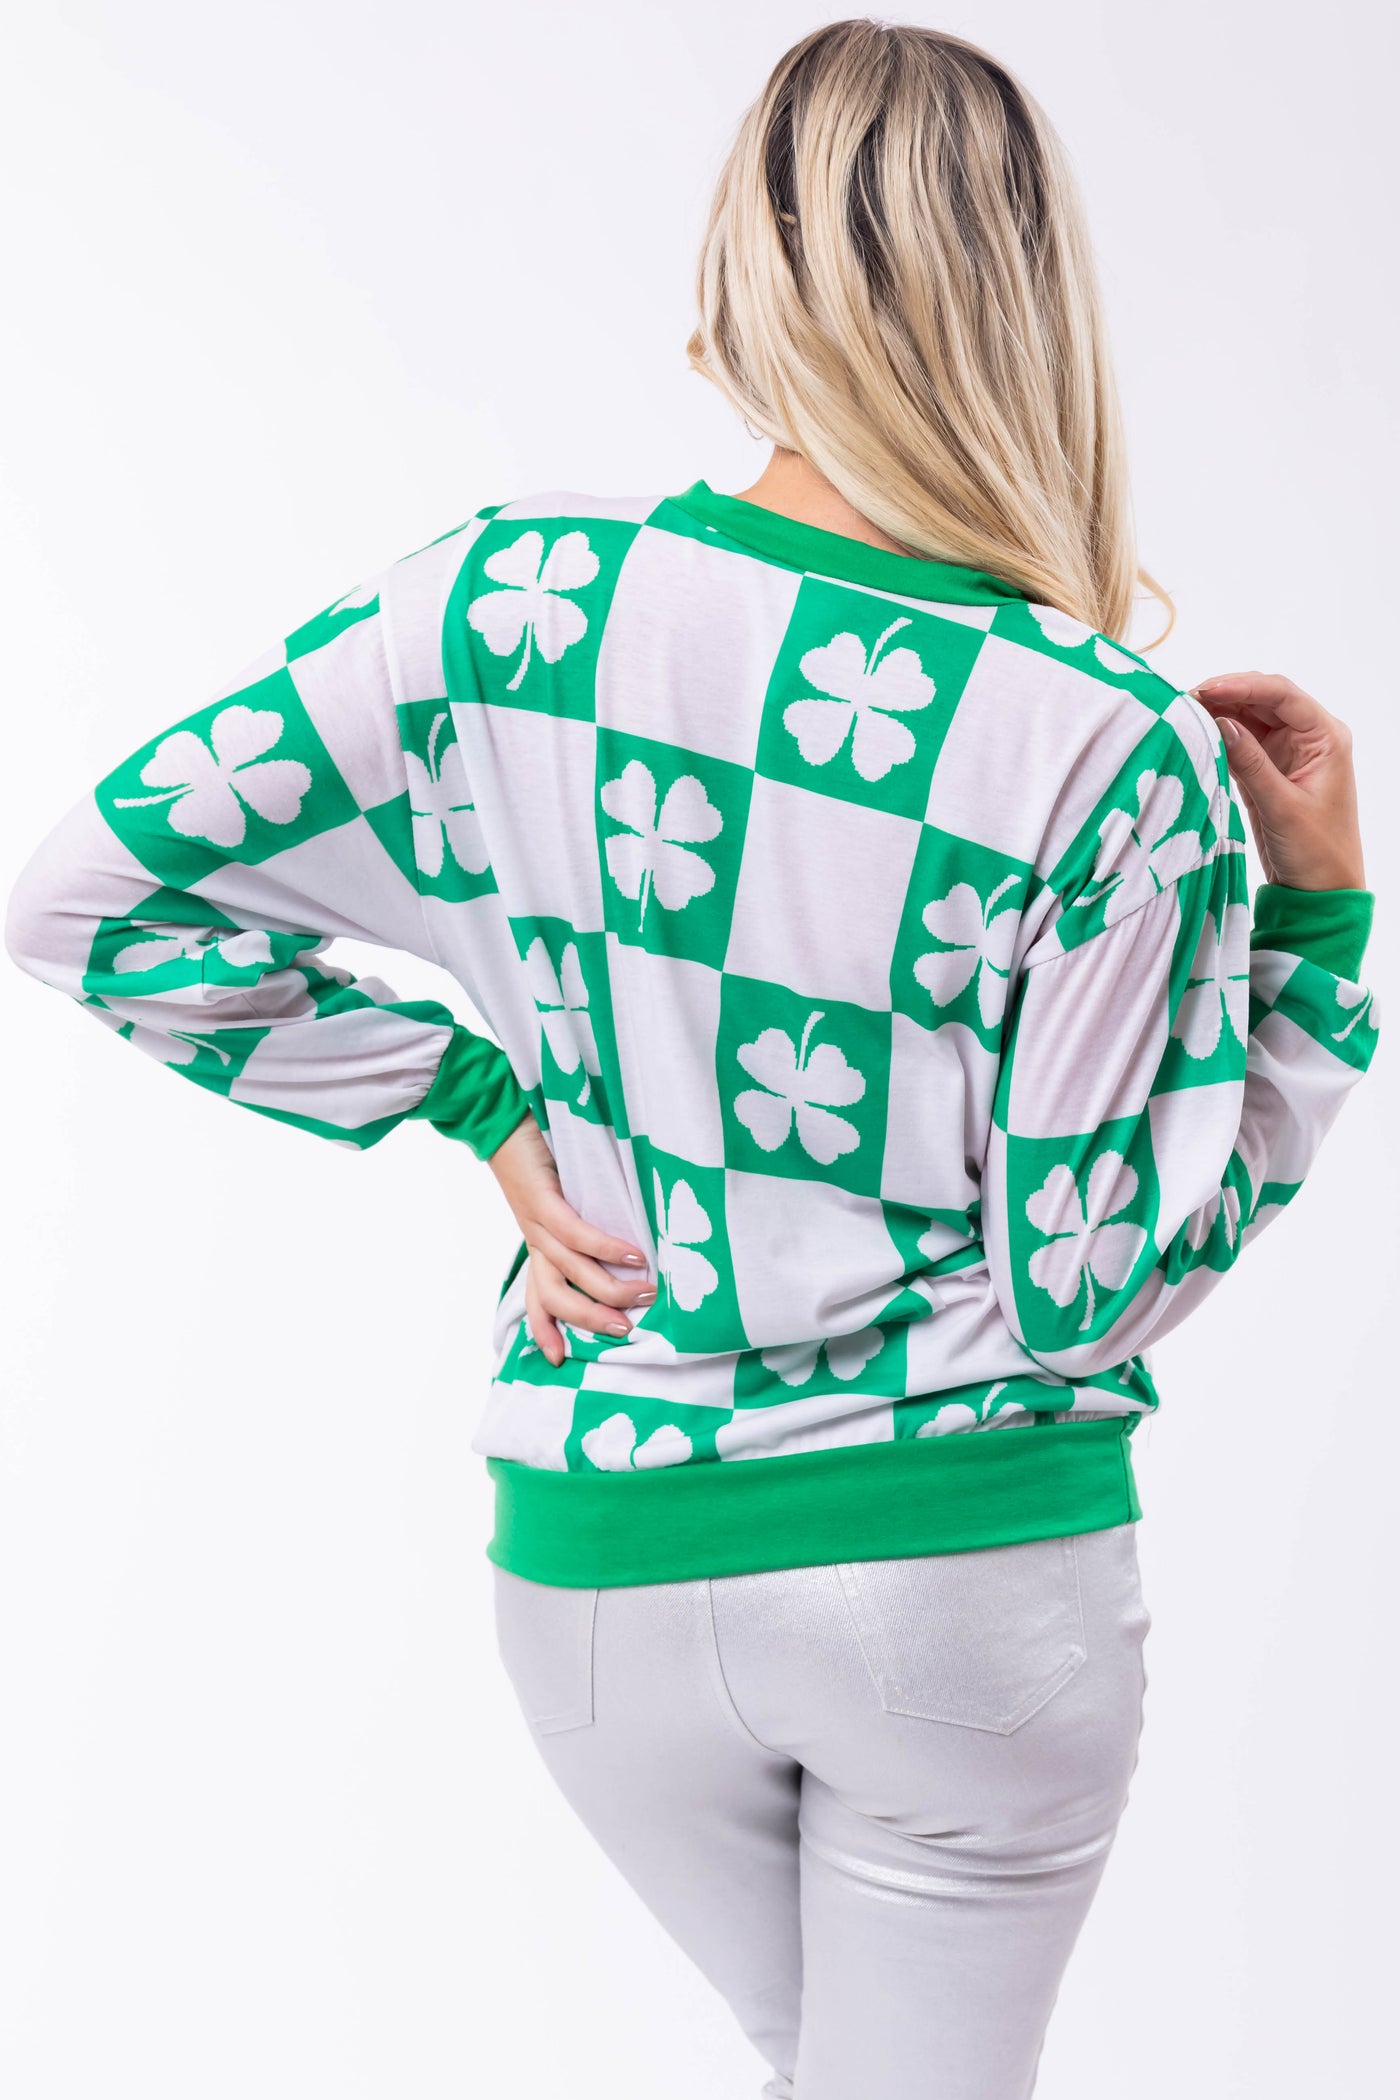 Jade Checkered Clover Lightweight Sweatshirt